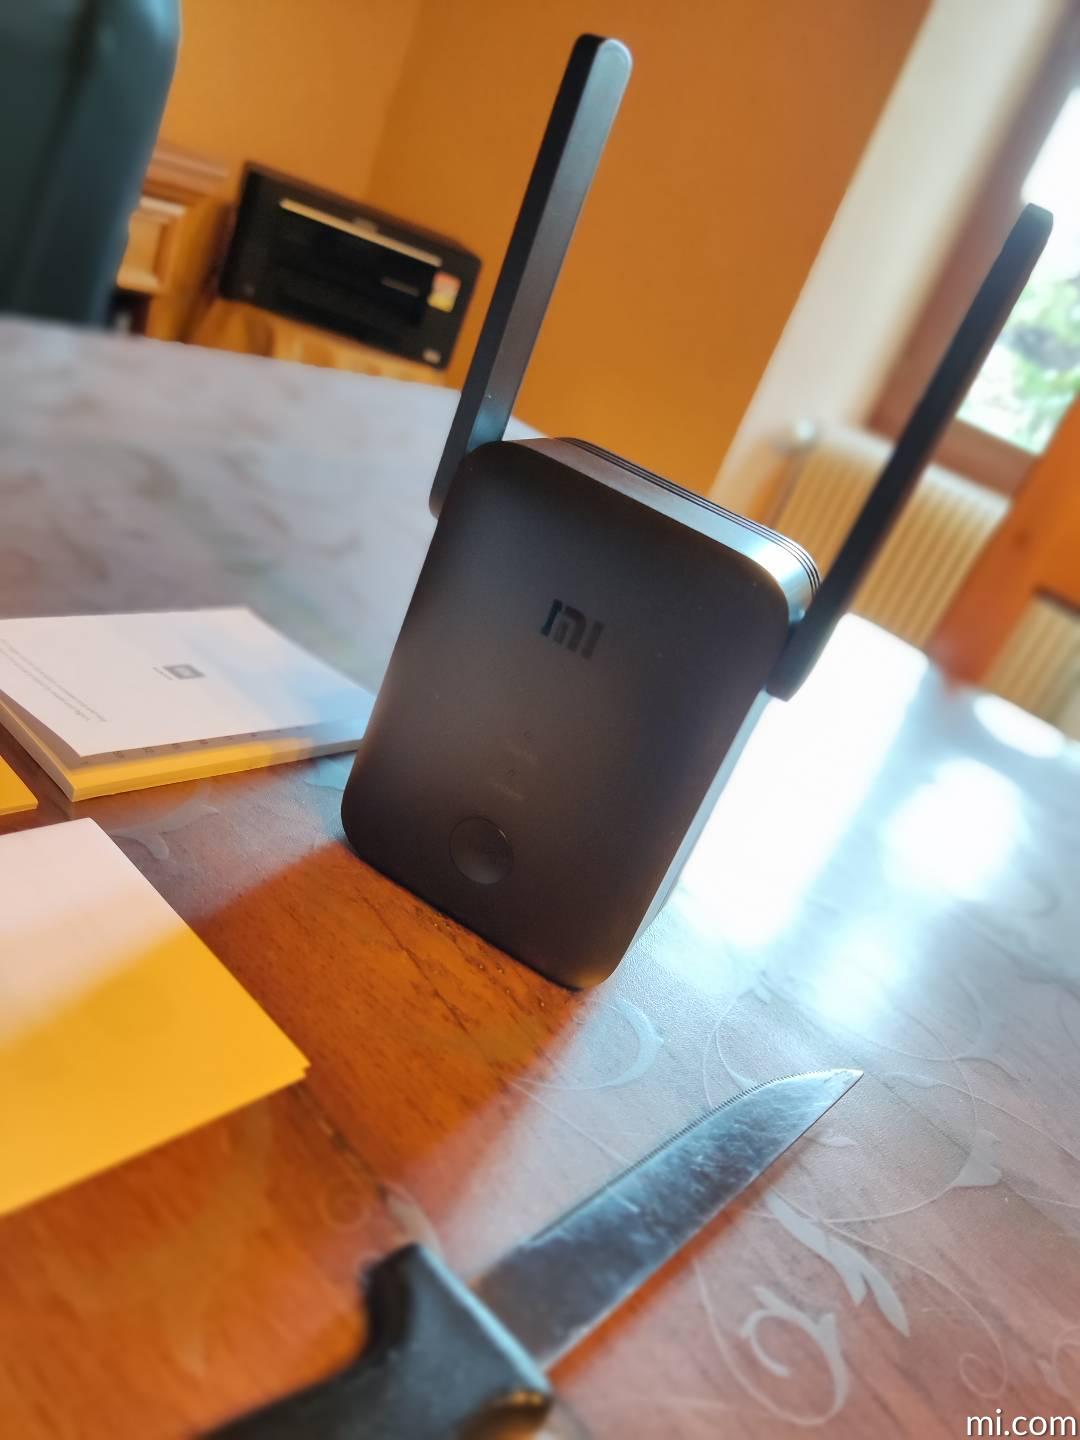 Mi WiFi Range Extender AC1200 - Xiaomi France